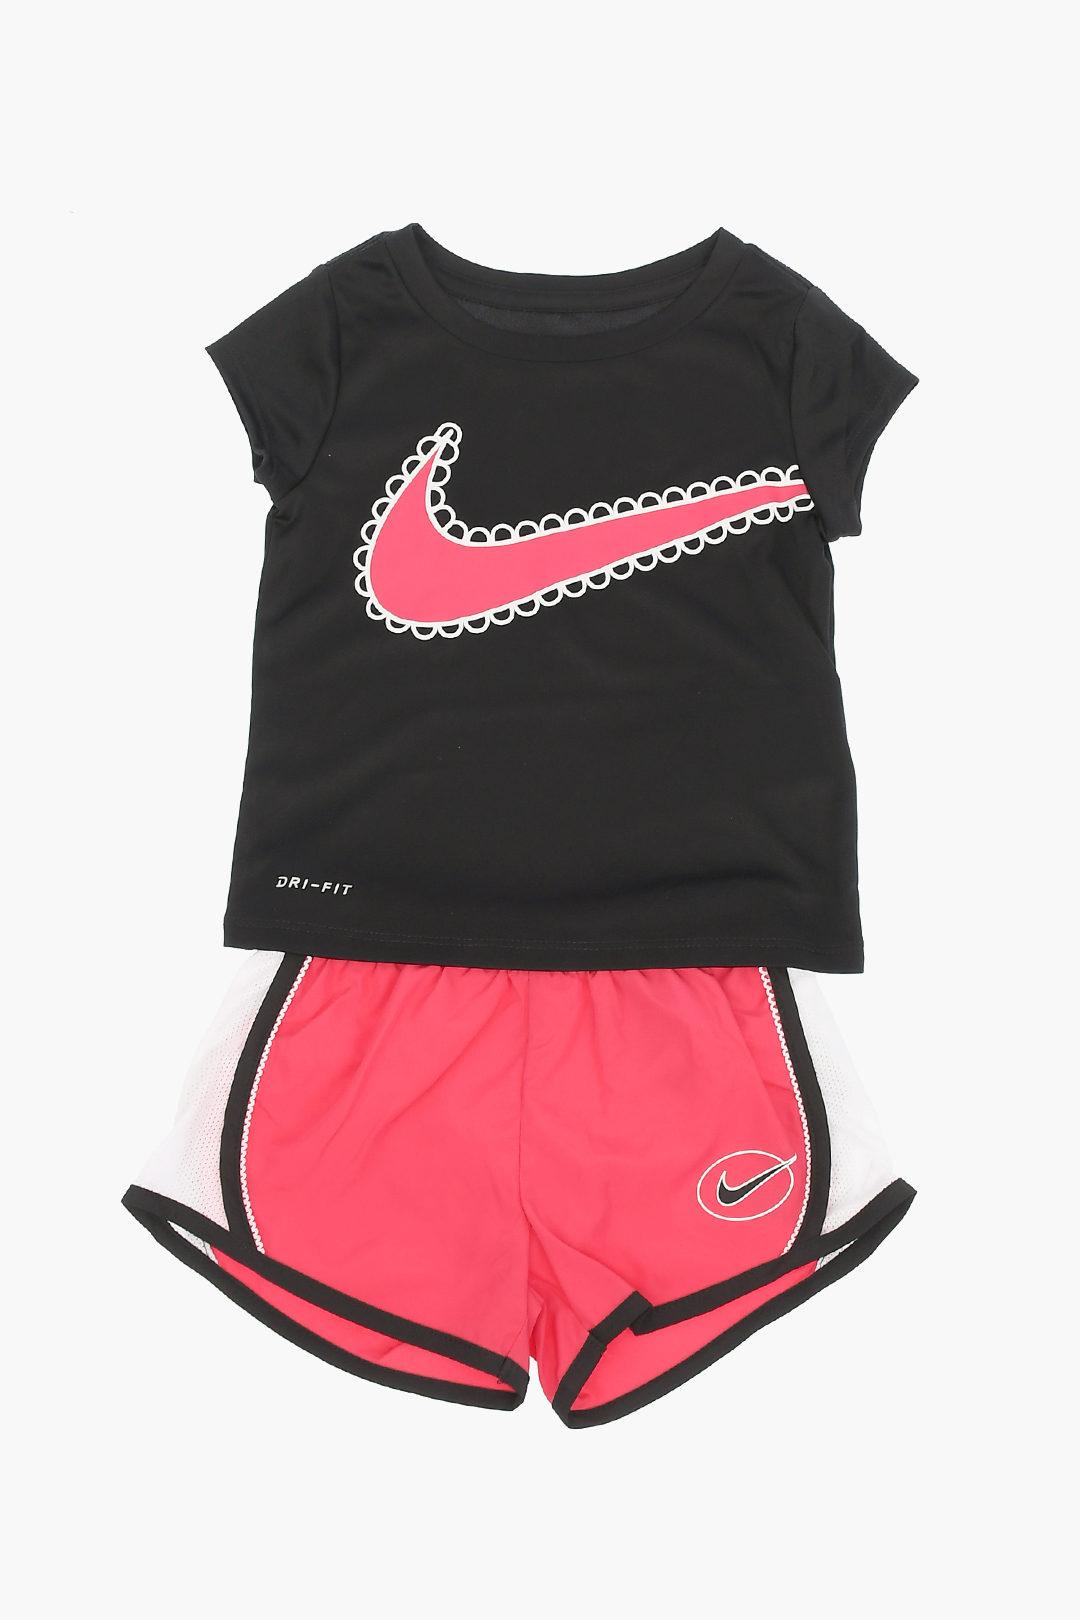 Nike KIDS Shorts T-shirt girls - Outlet